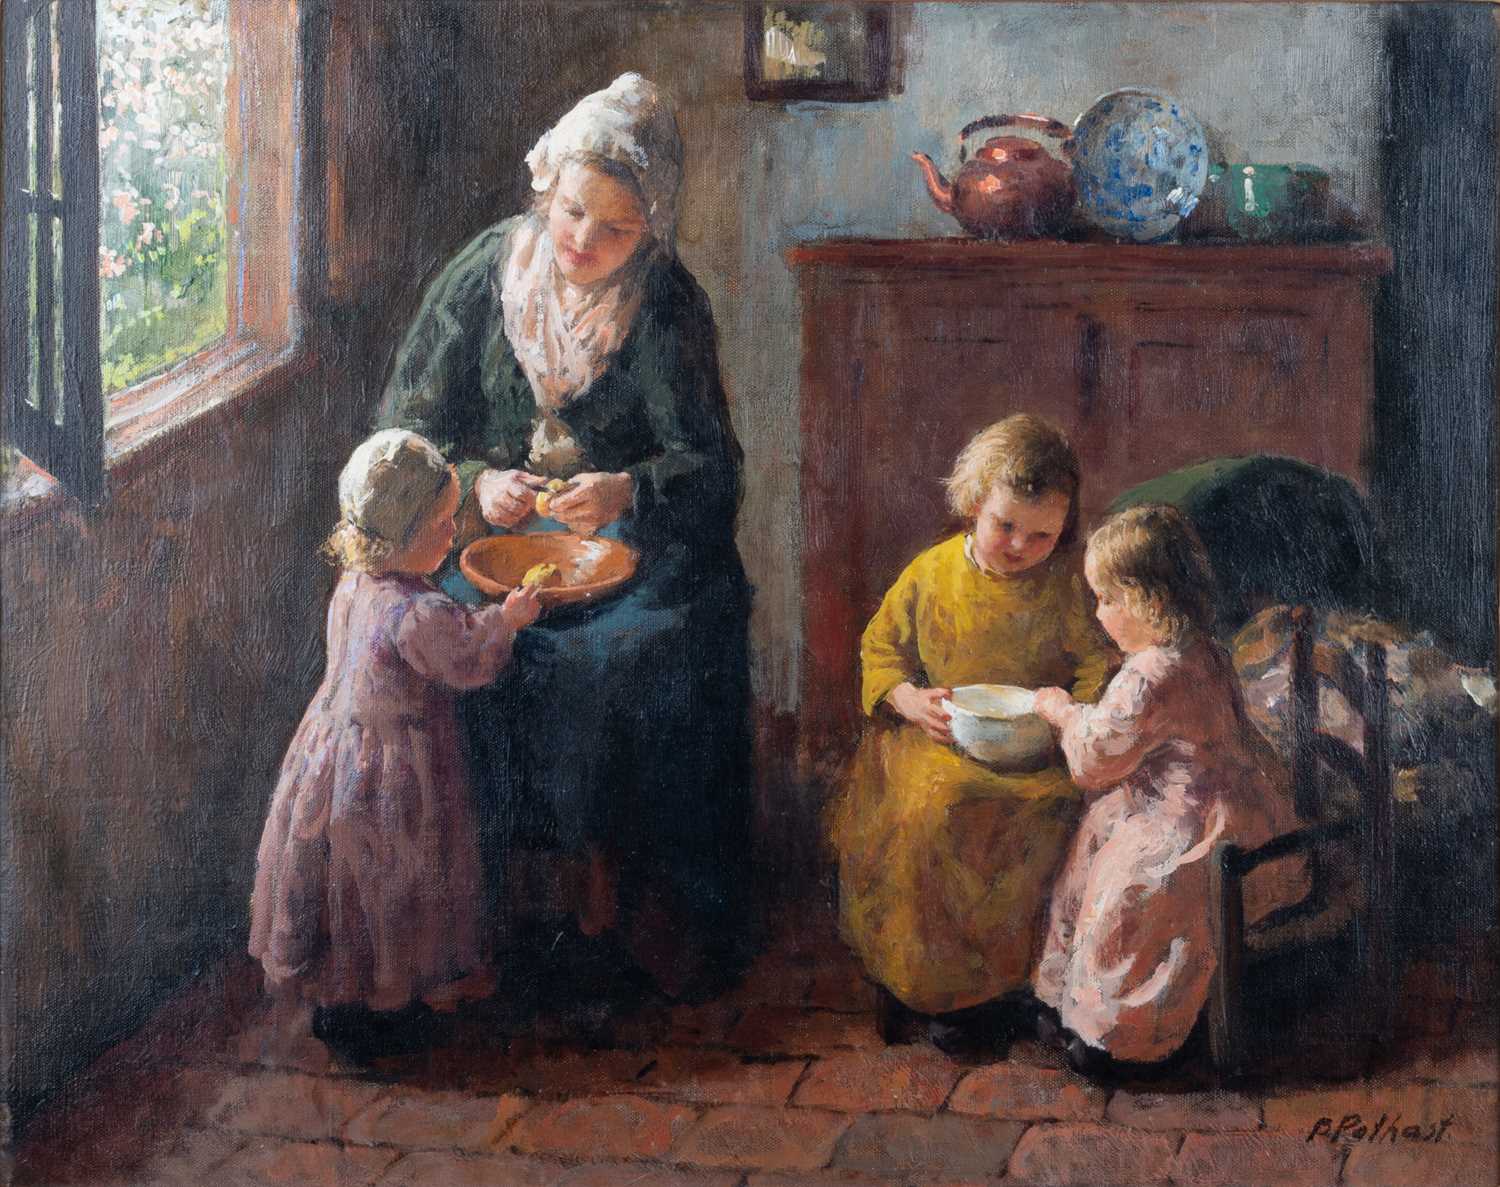 BERNARD JEAN CORNEILLE POTHAST (DUTCH 1882-1966) MOTHER AND CHILDREN IN AN INTERIOR - Image 2 of 4